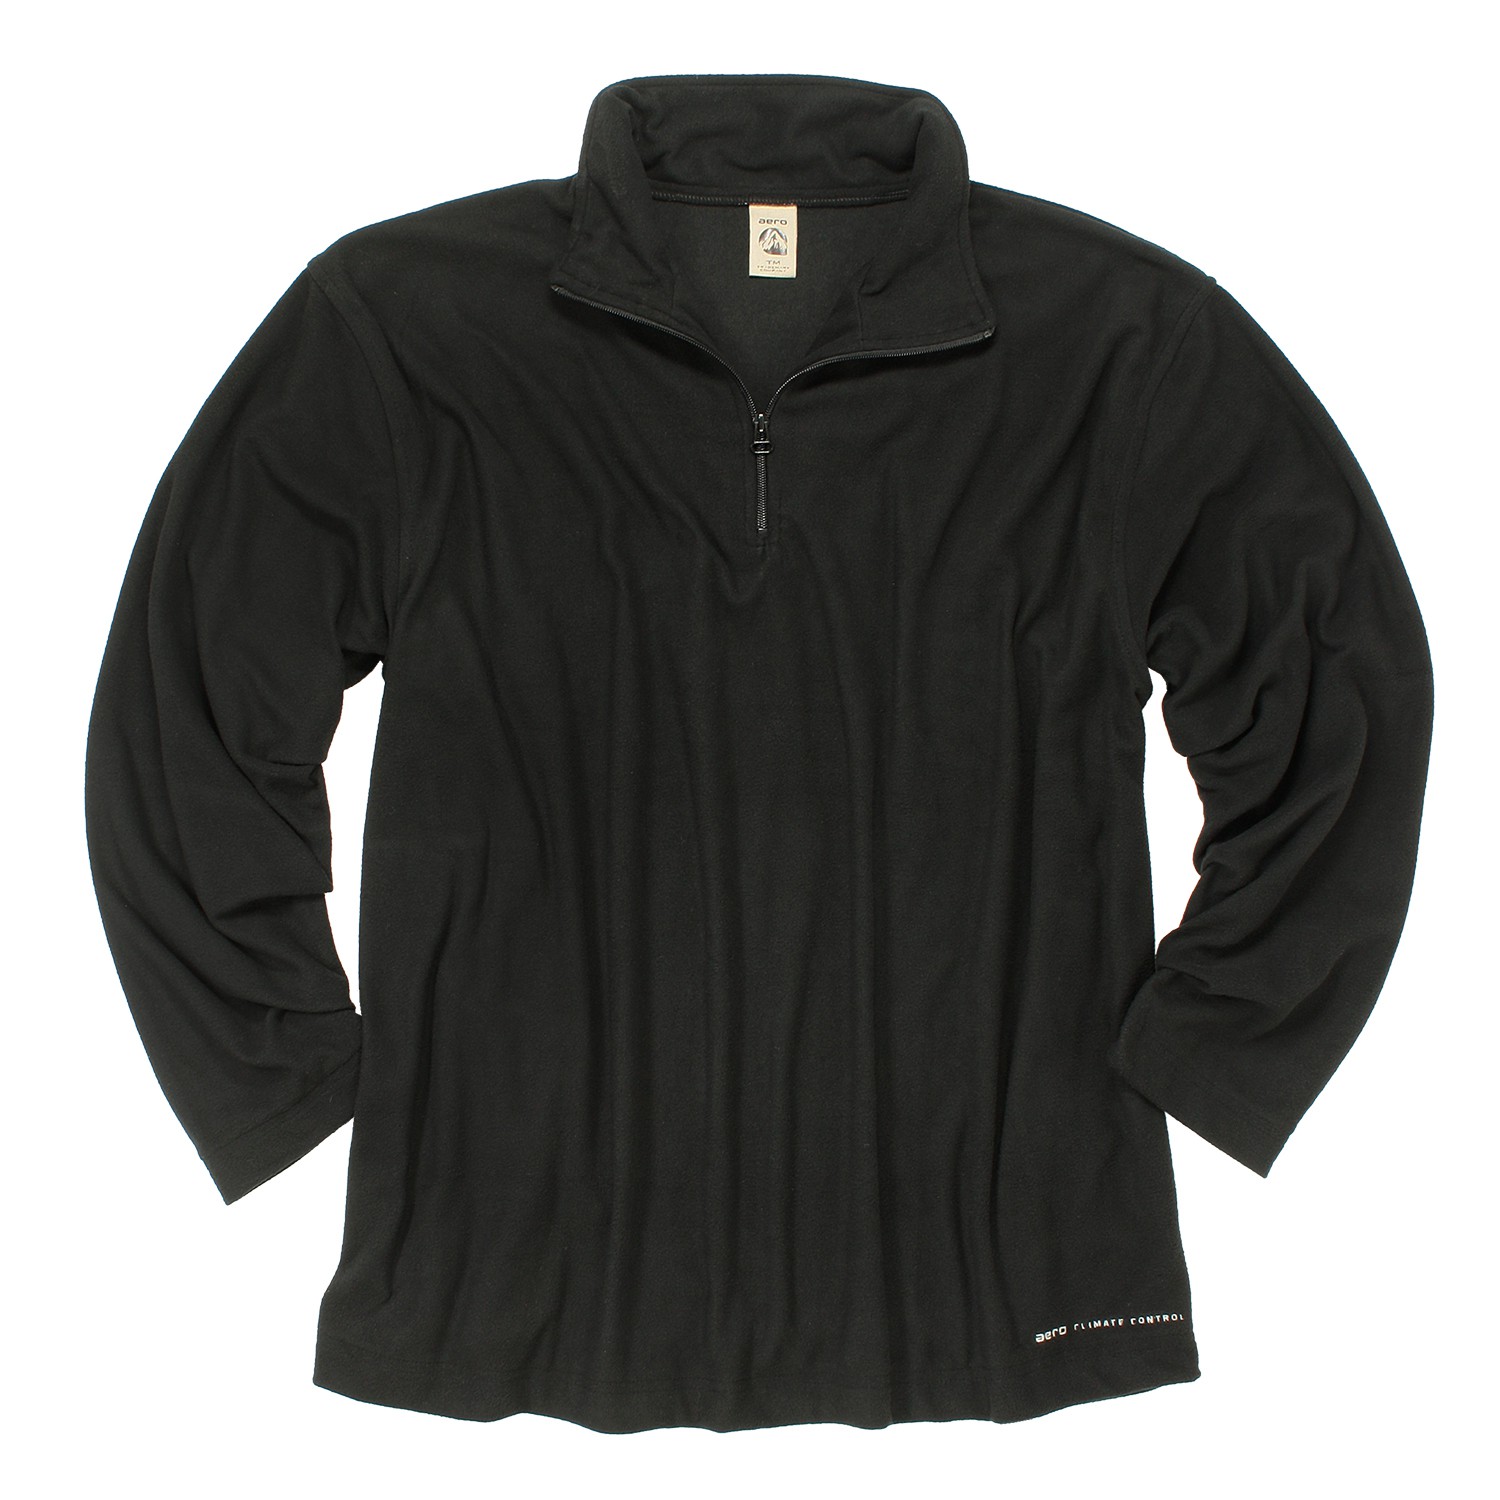 Black Fleece Pullover by Aero in plus sizes